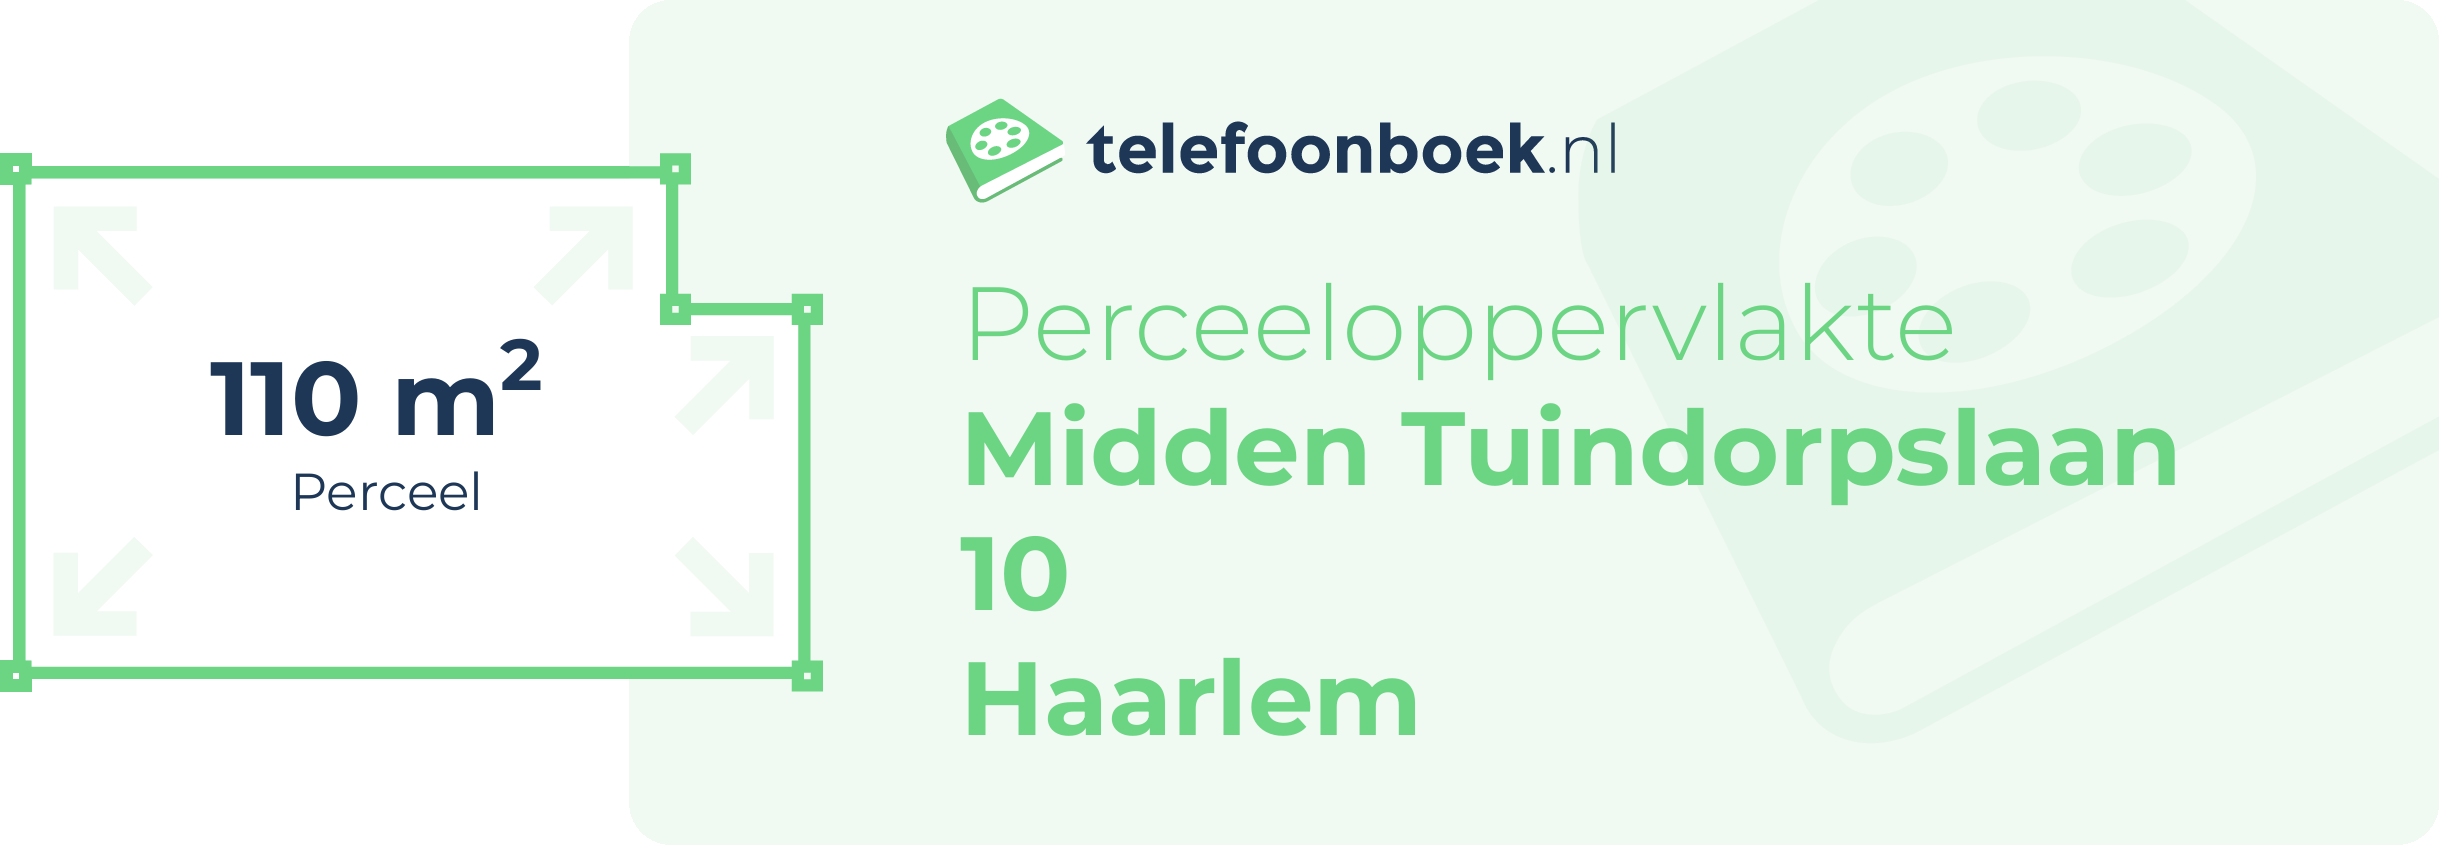 Perceeloppervlakte Midden Tuindorpslaan 10 Haarlem